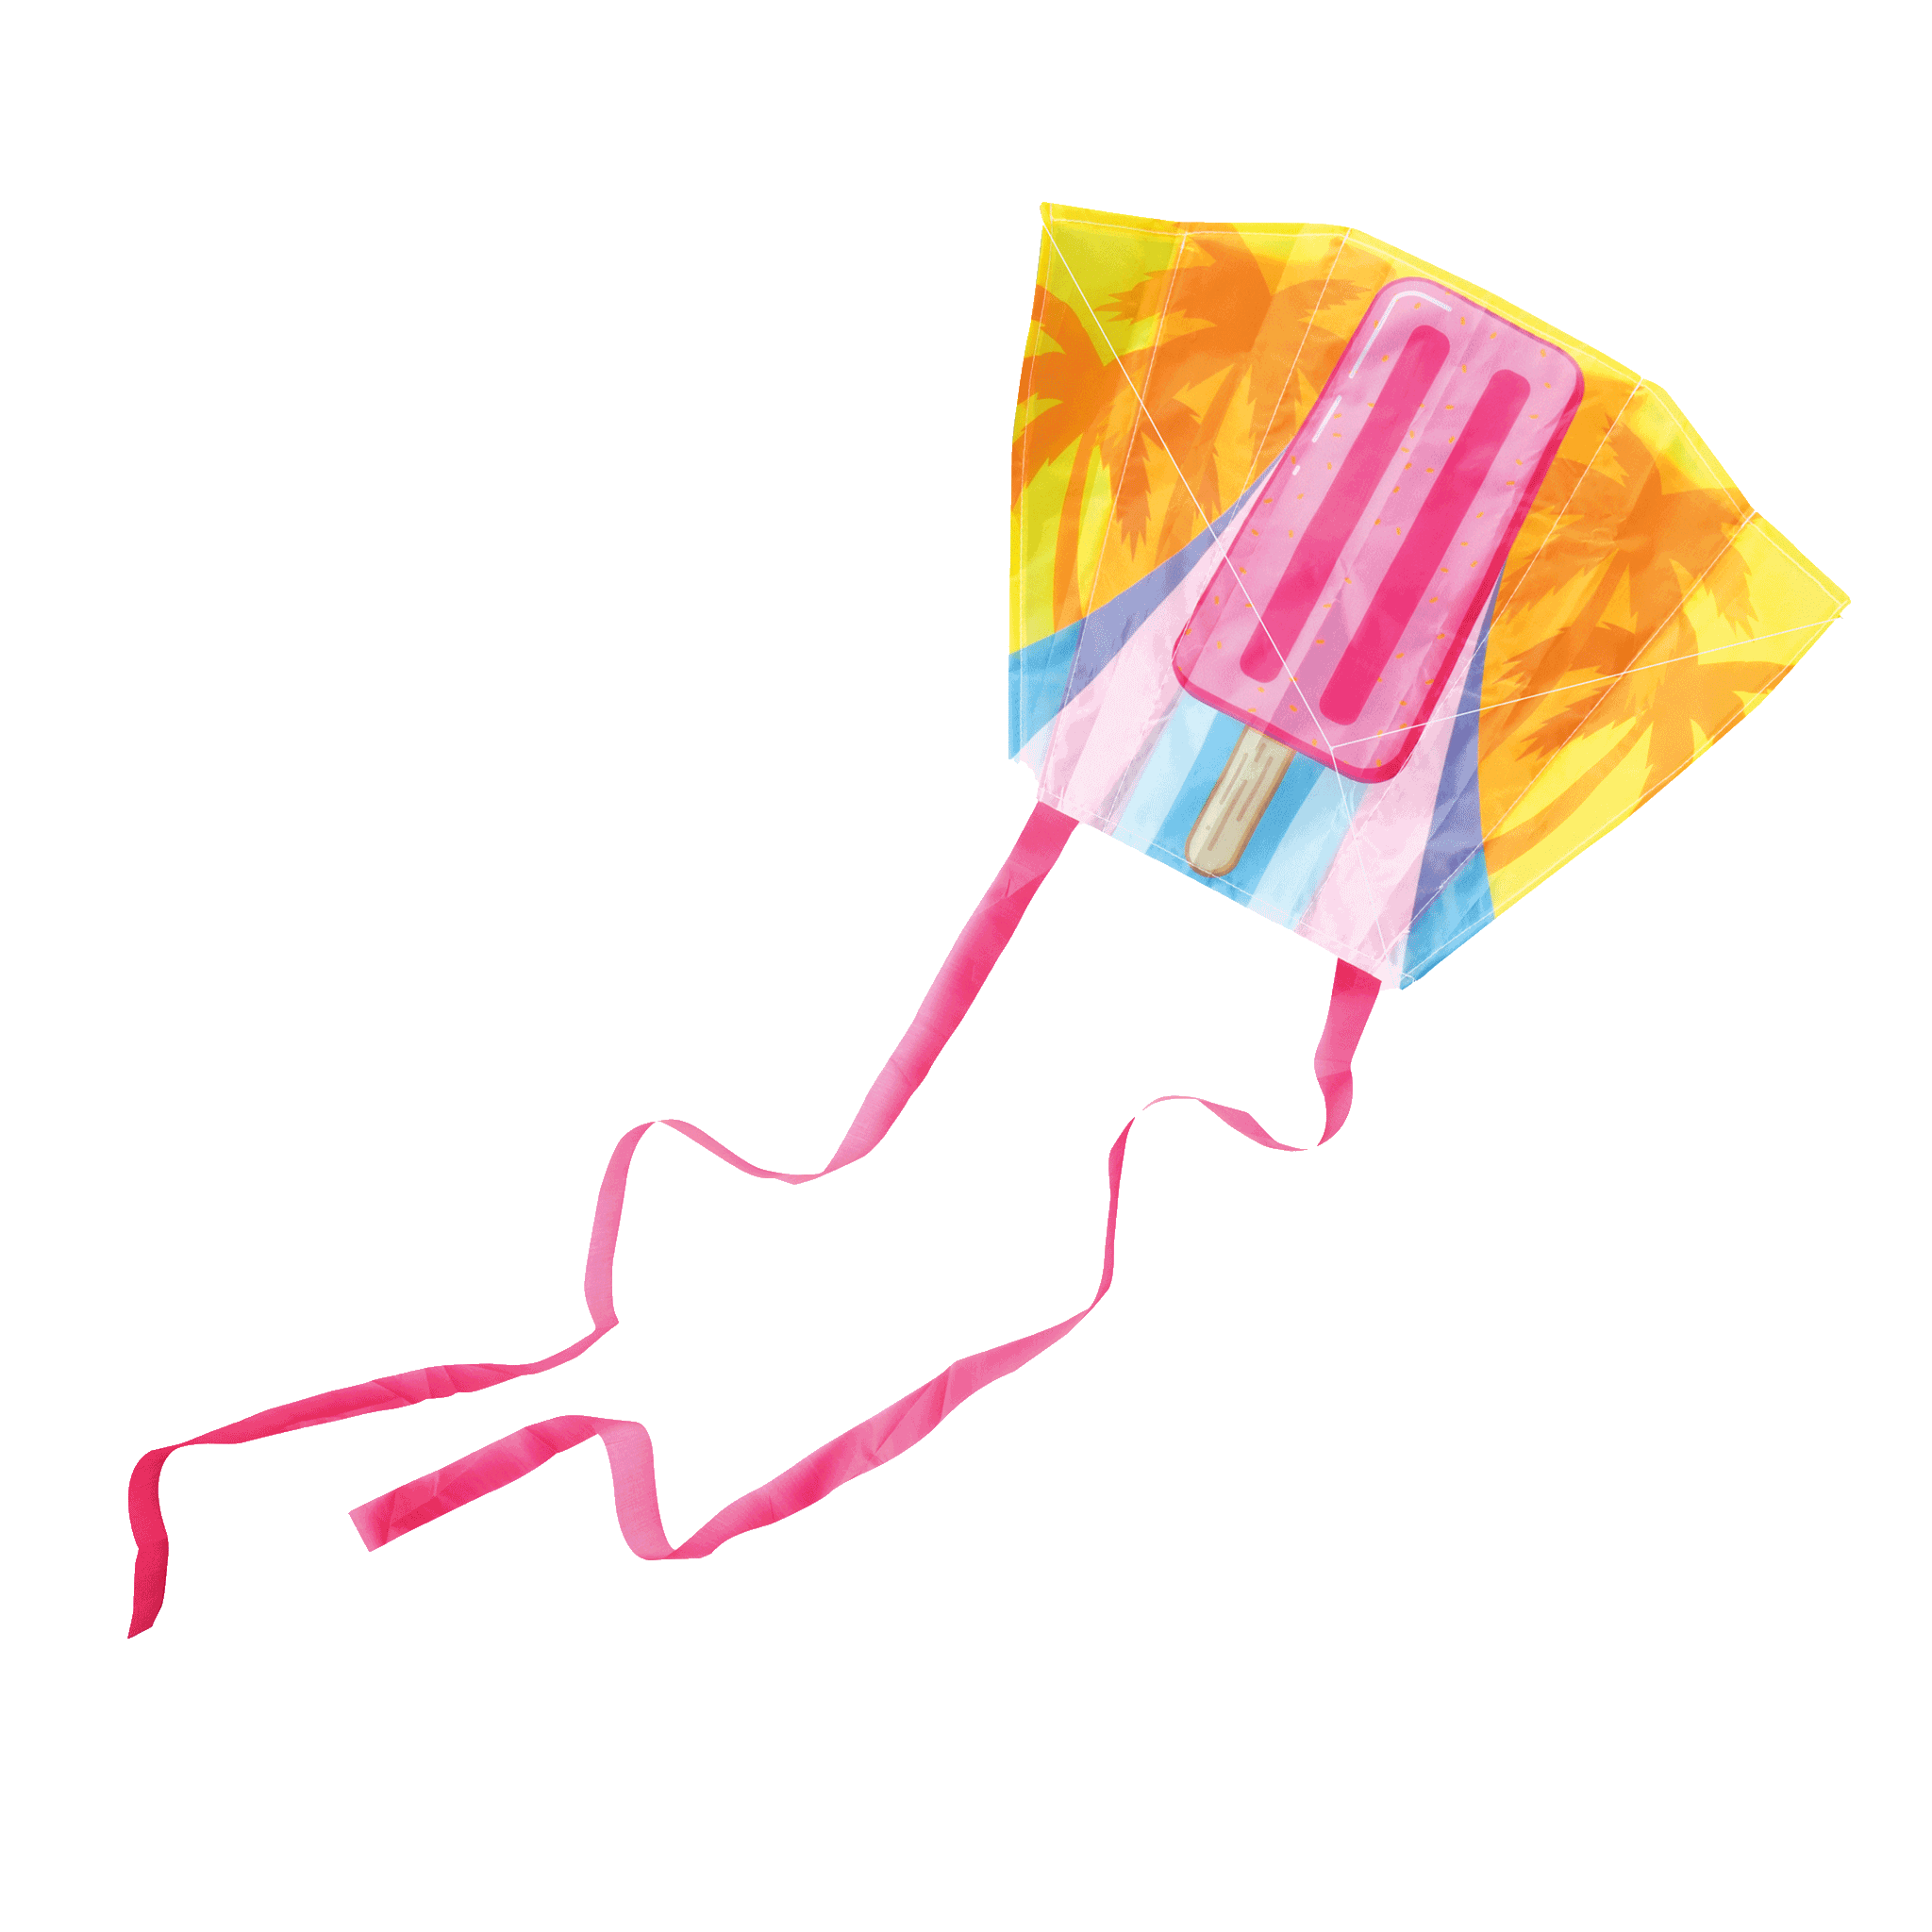 Mini Kite Poppy di Pop